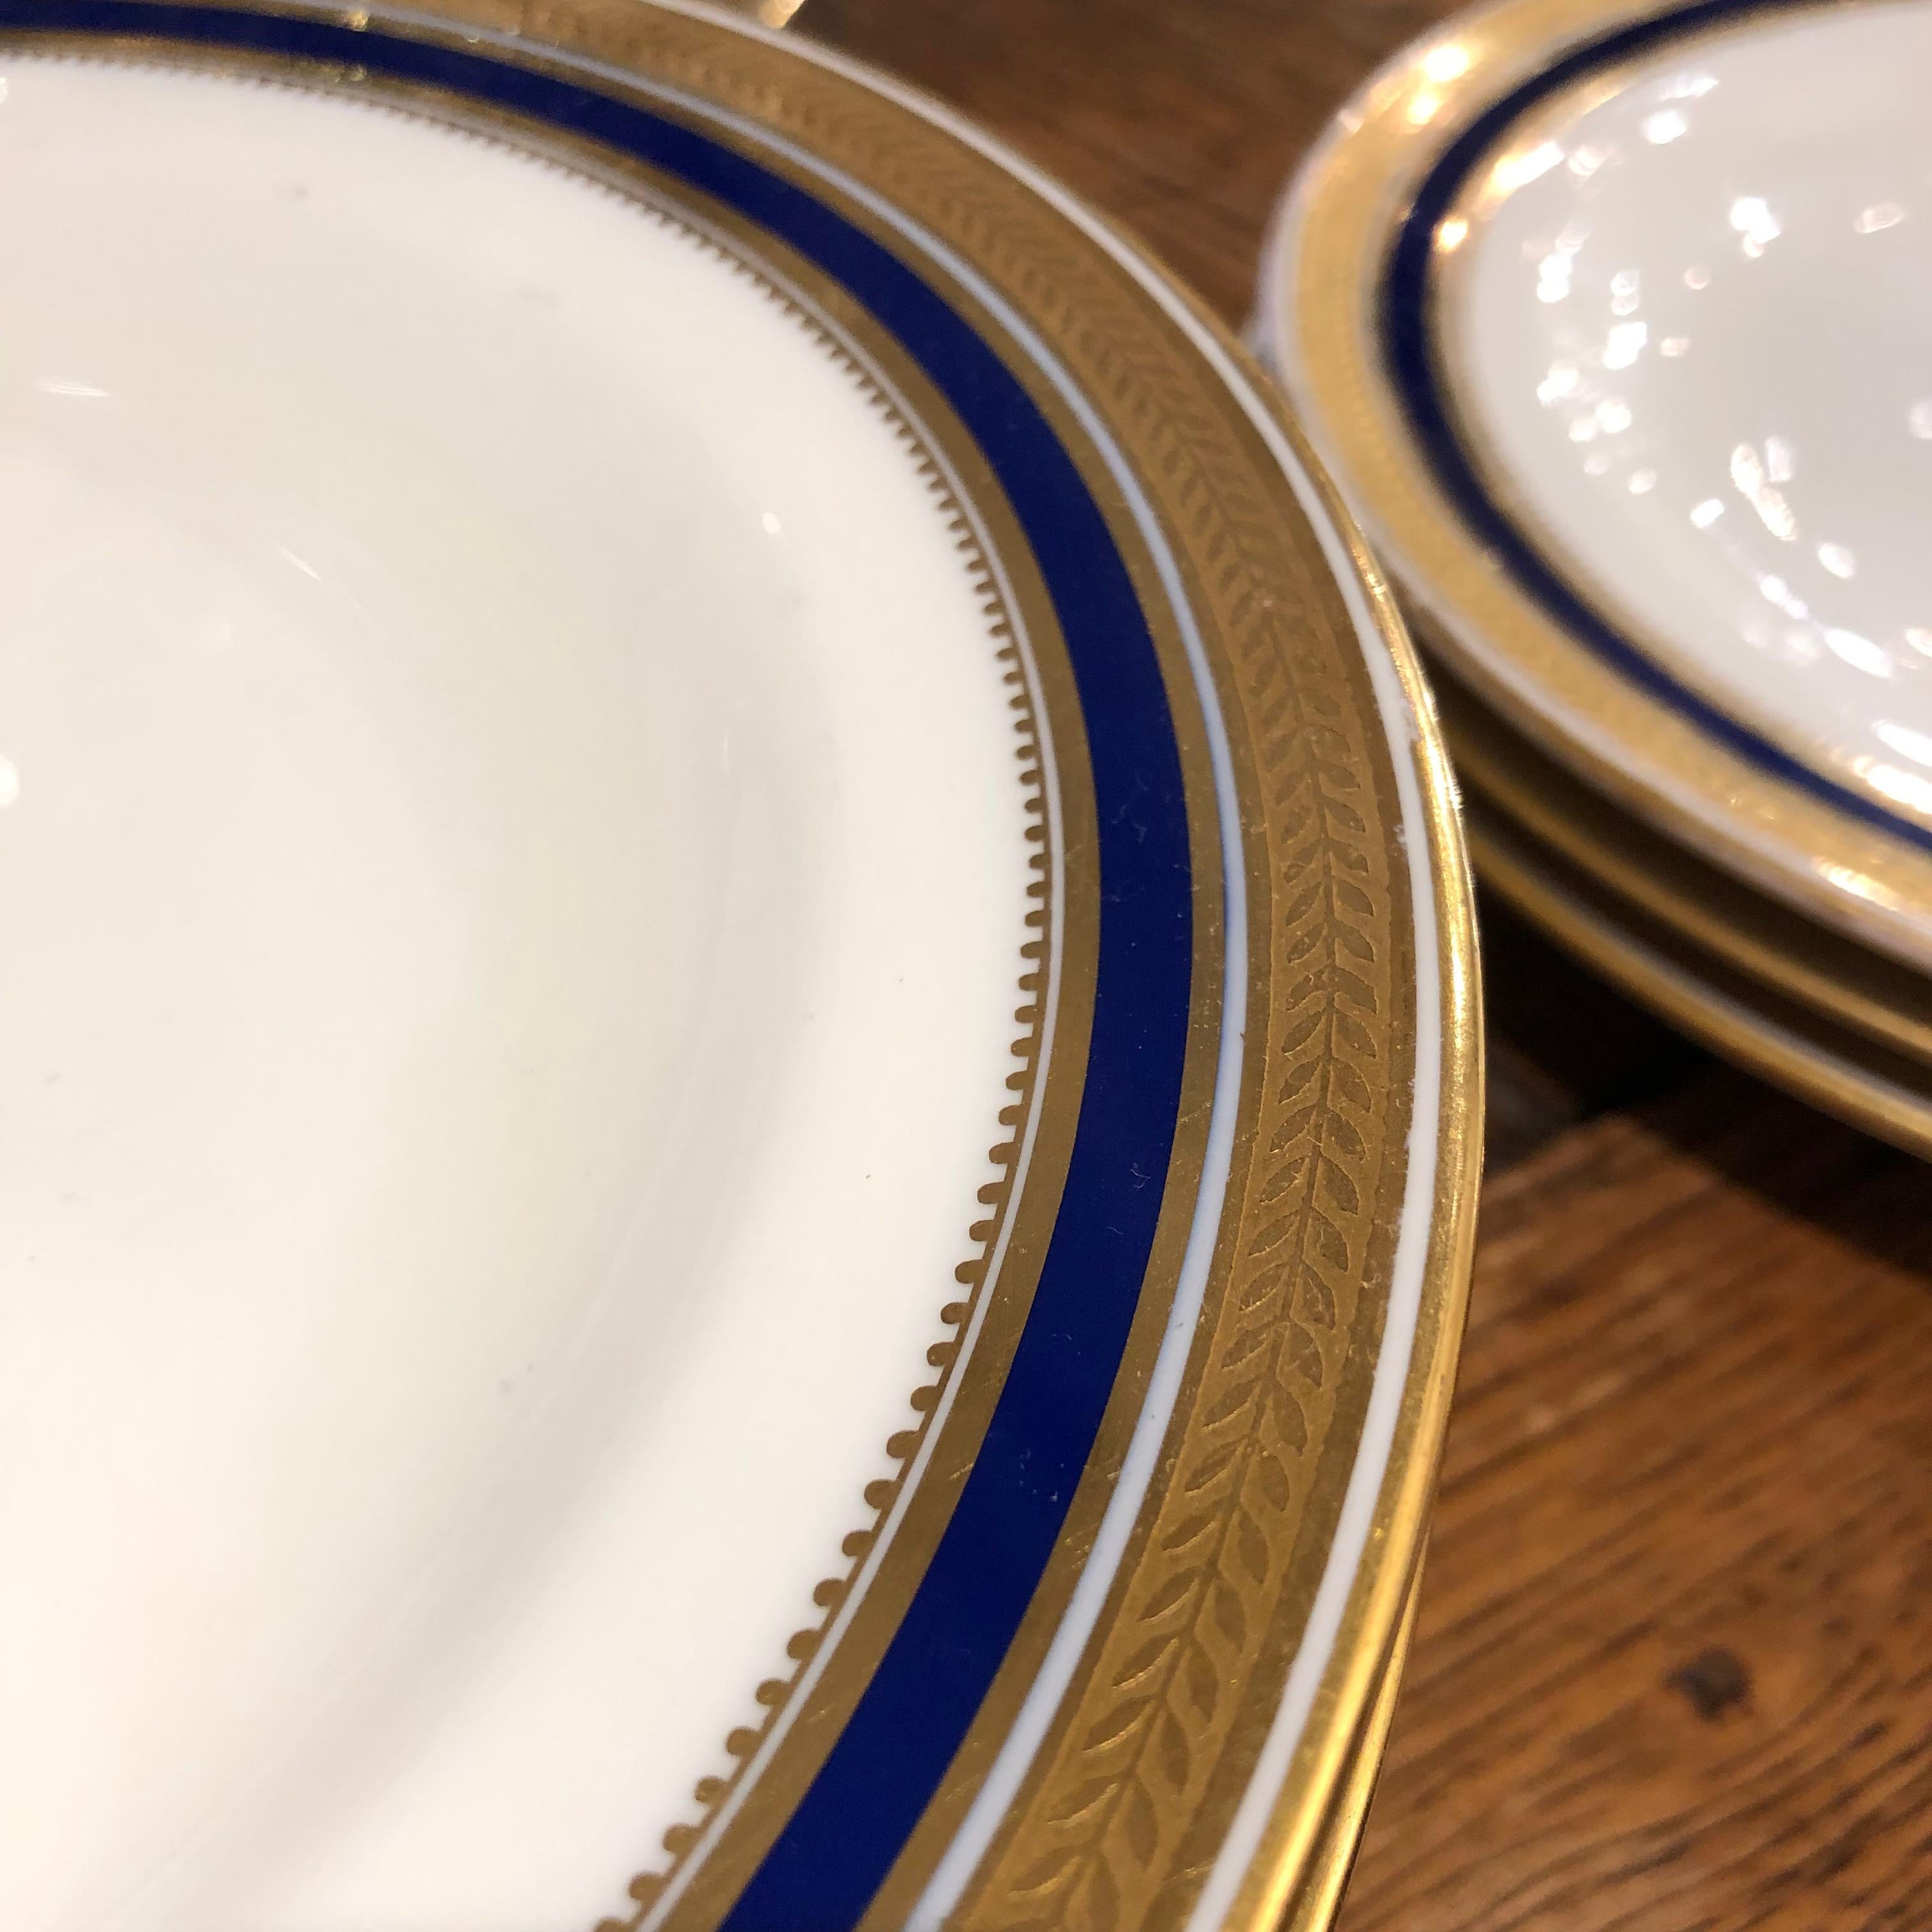 Set of 50 piece Cauldon, England gold rimmed bone china set.
16 dinner plates, 6 luncheon, 6 salad/bread, 11 soup bowls, 11 fruit bowls.